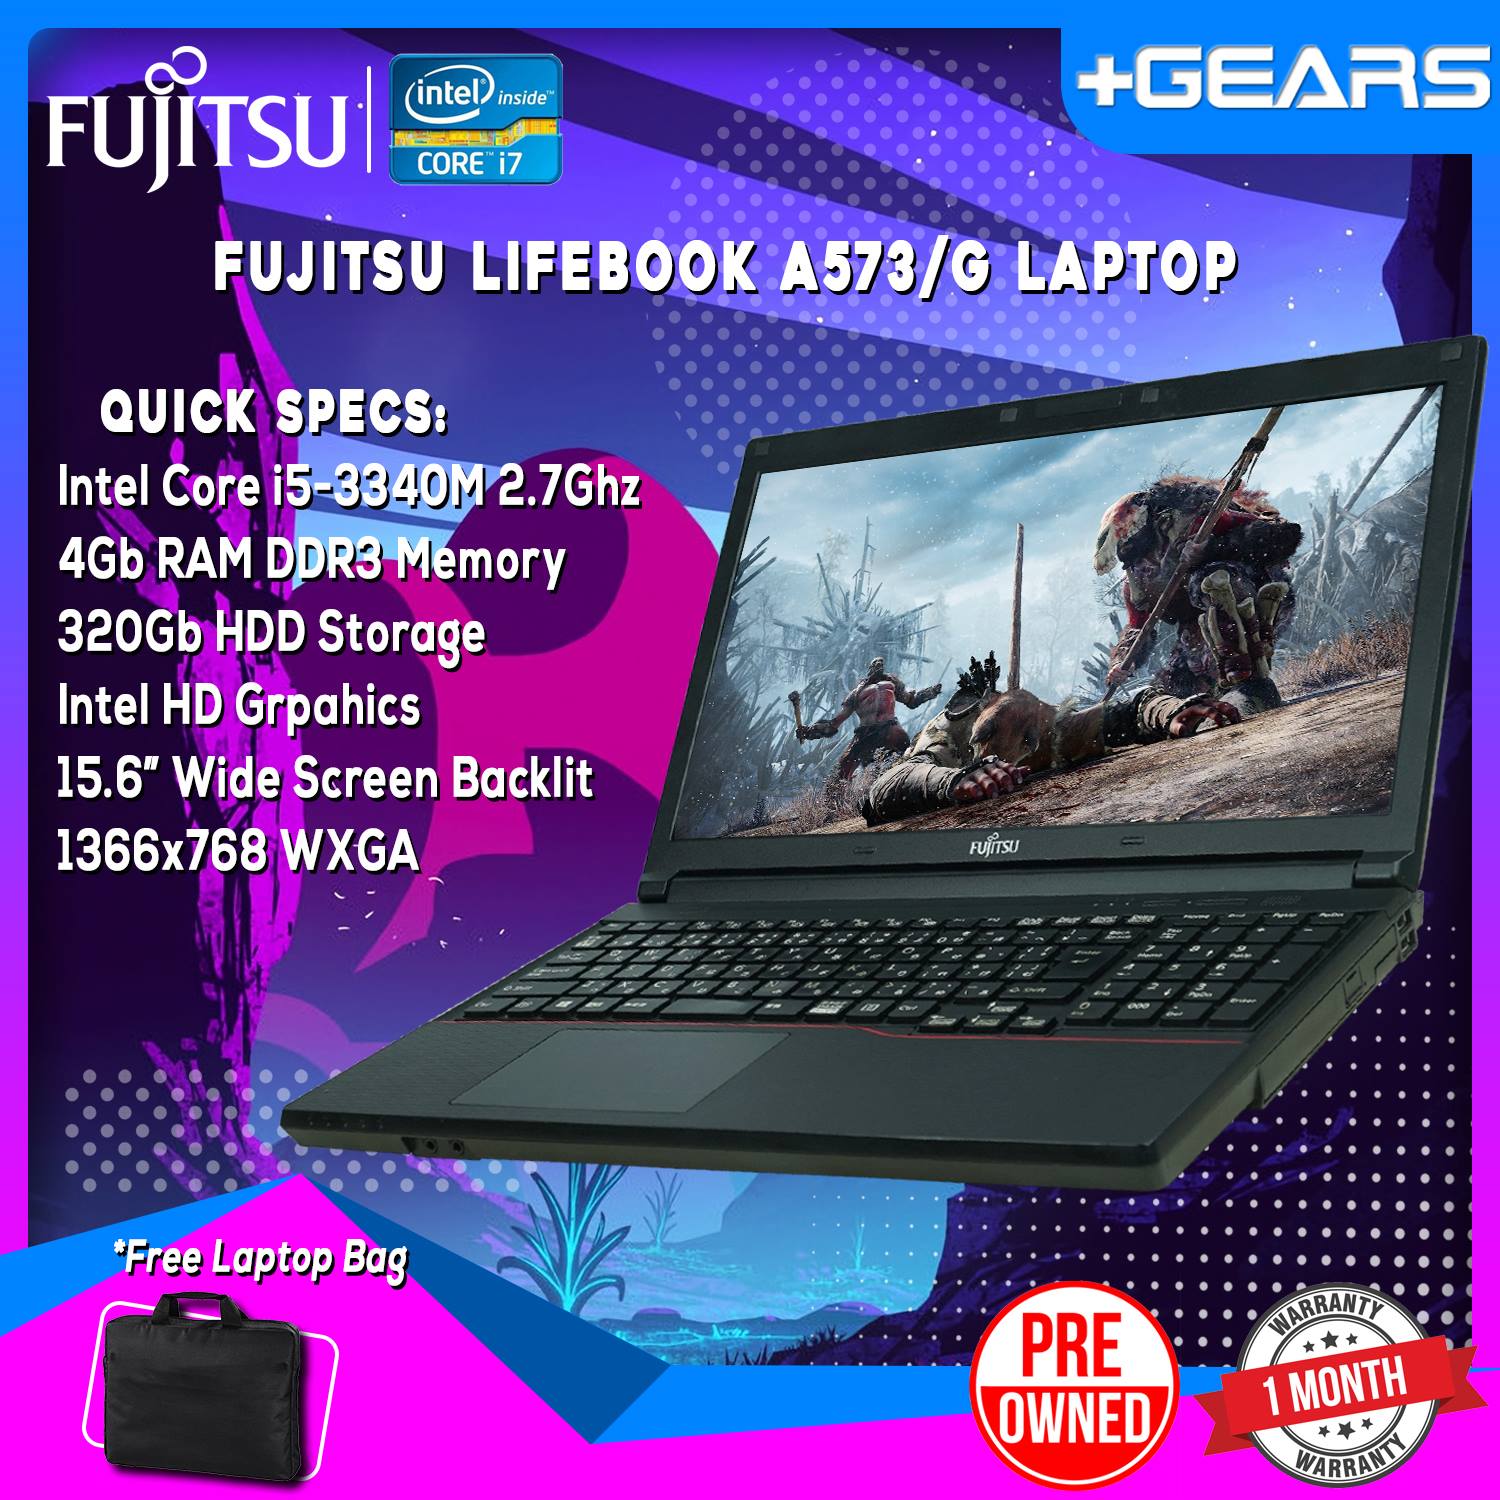 Fujitsu Lifebook A573/G Laptop | Intel Core i5 3340M 4GB RAM DDR3 